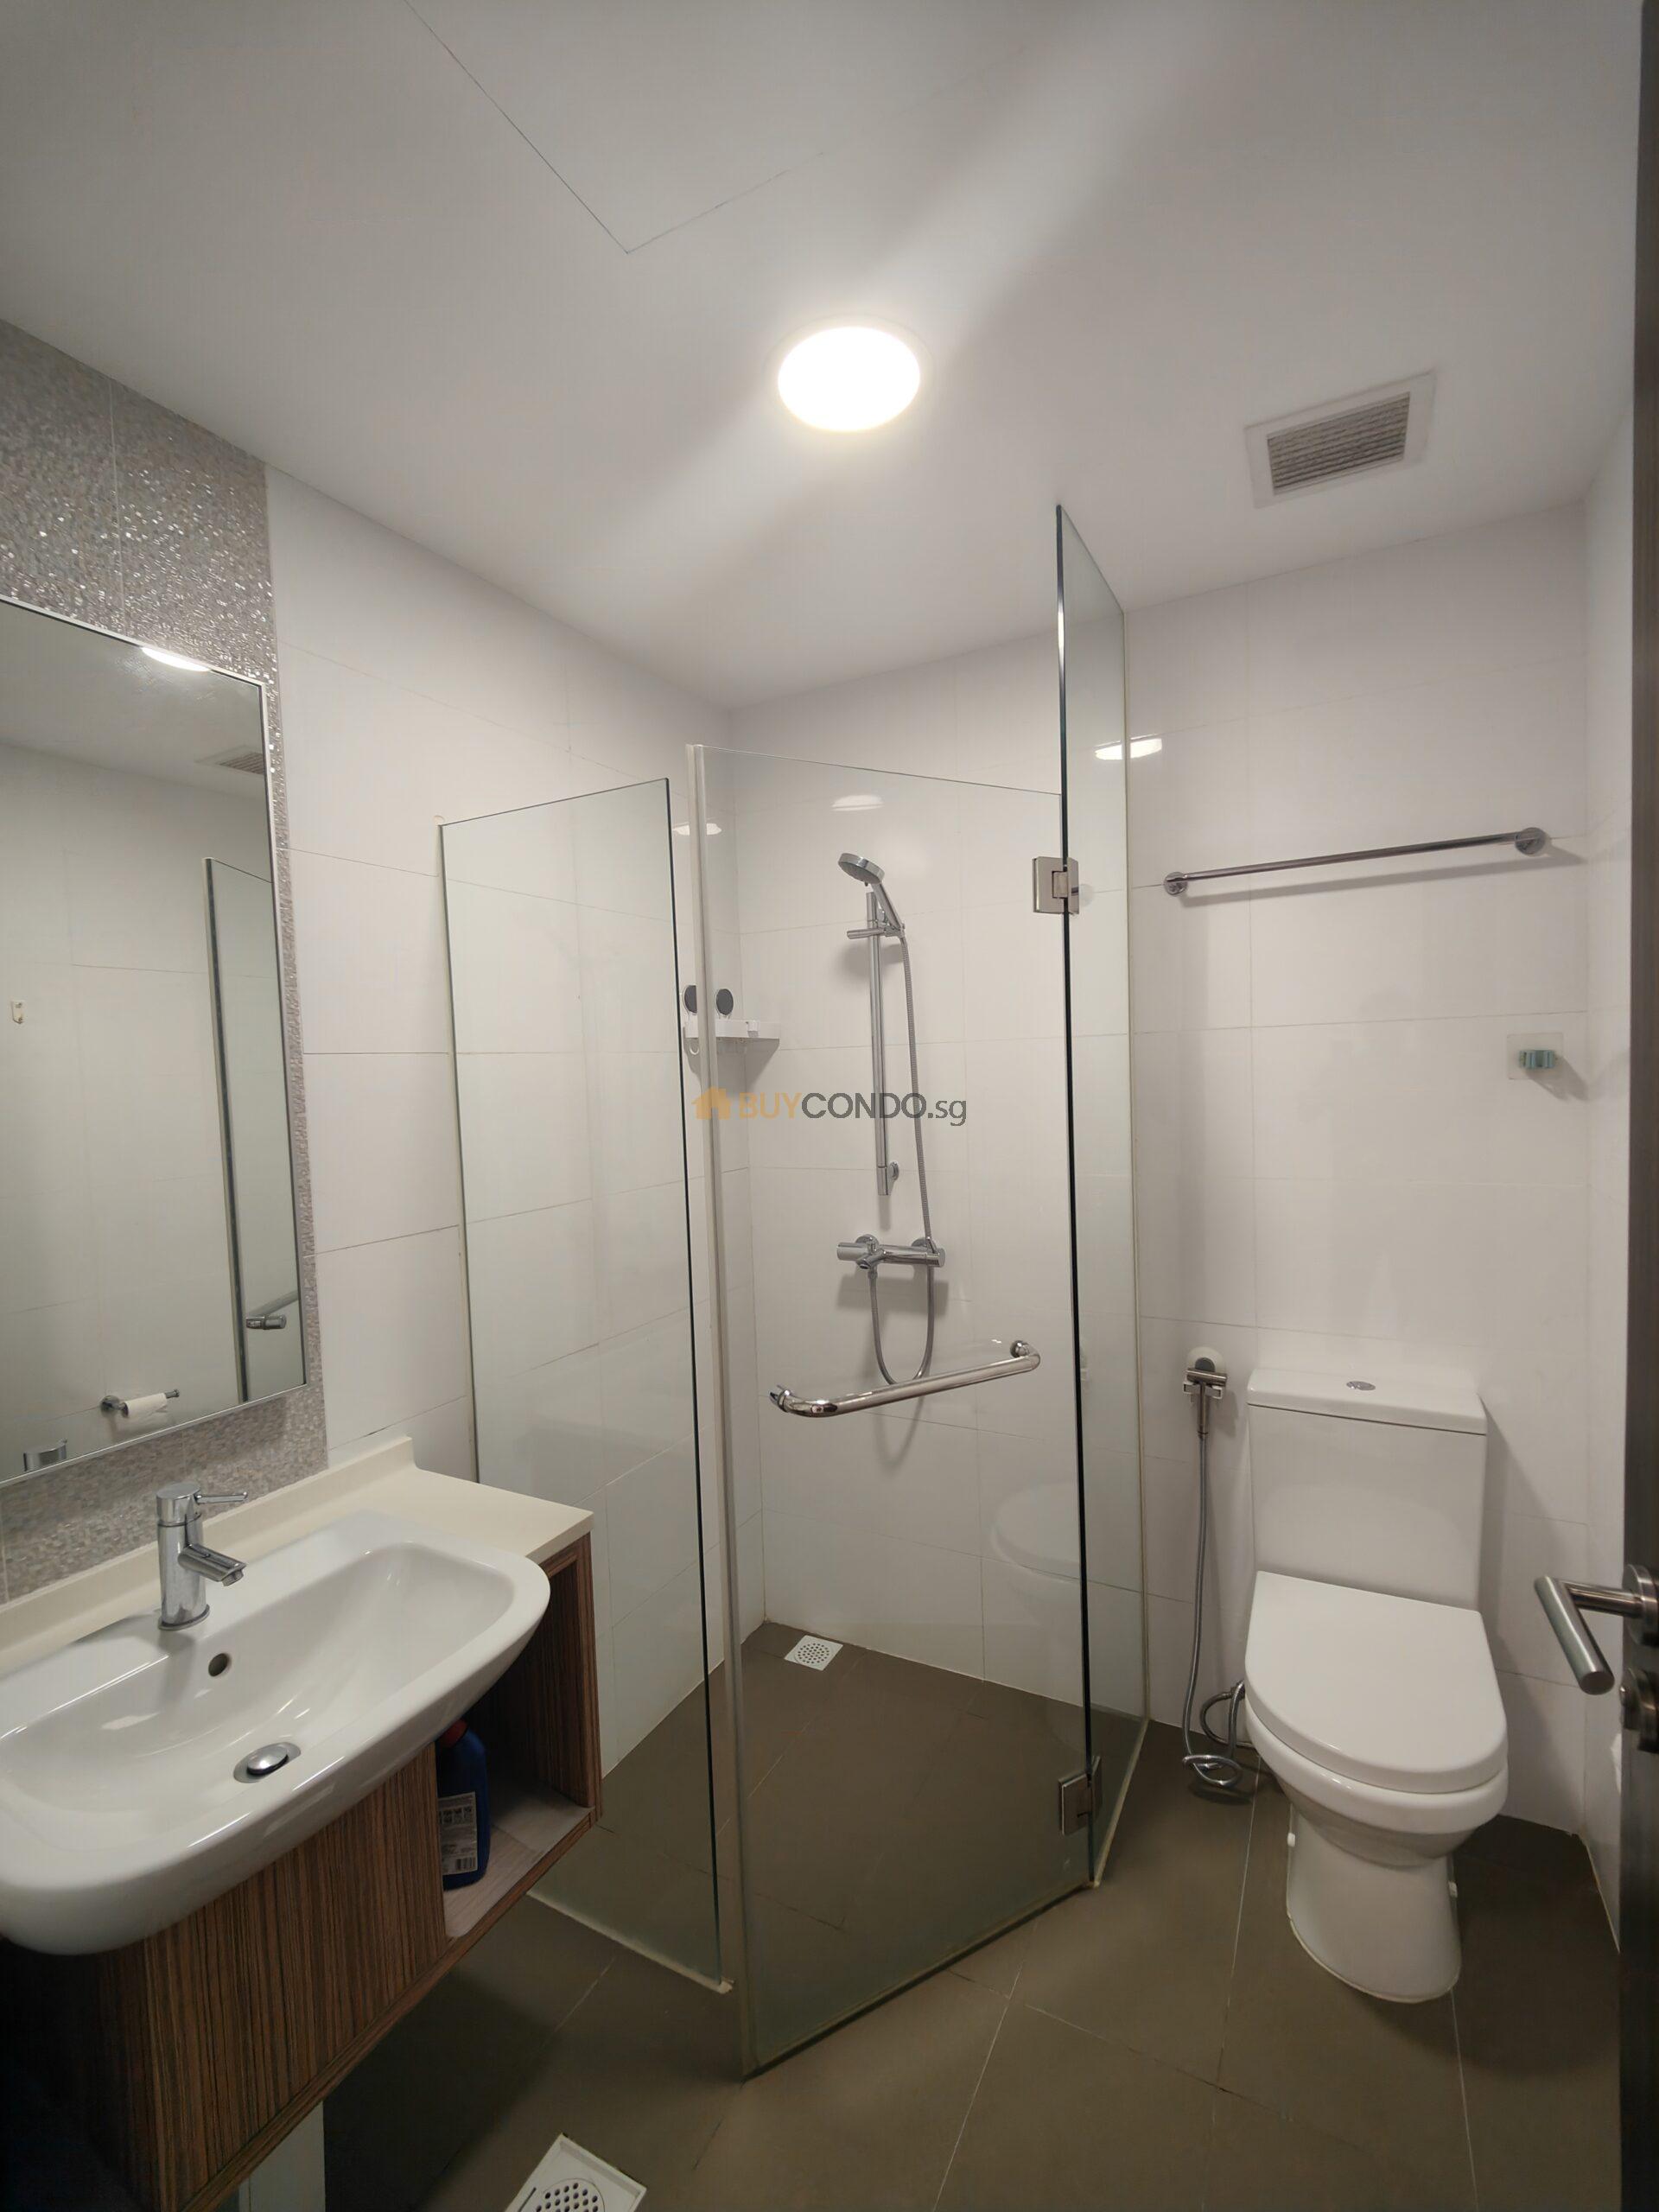 Heron Bay Condominium Master Bedroom for Rent Attached Bath